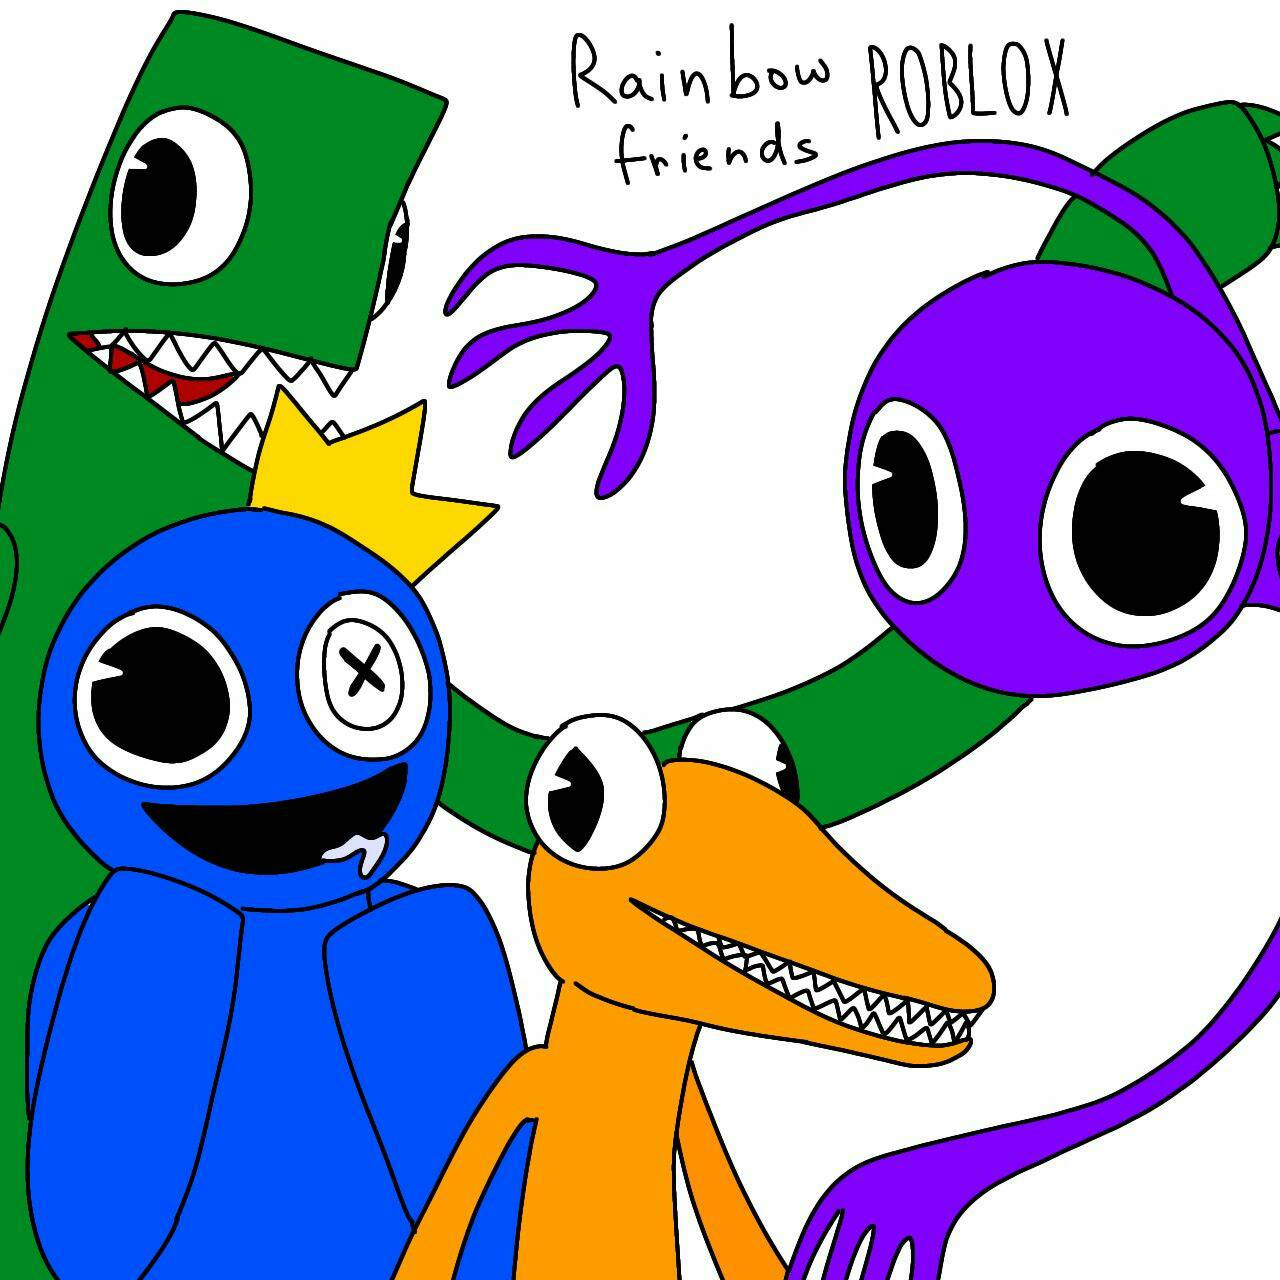 Rainbow friends roblox by Hola12345XD on DeviantArt